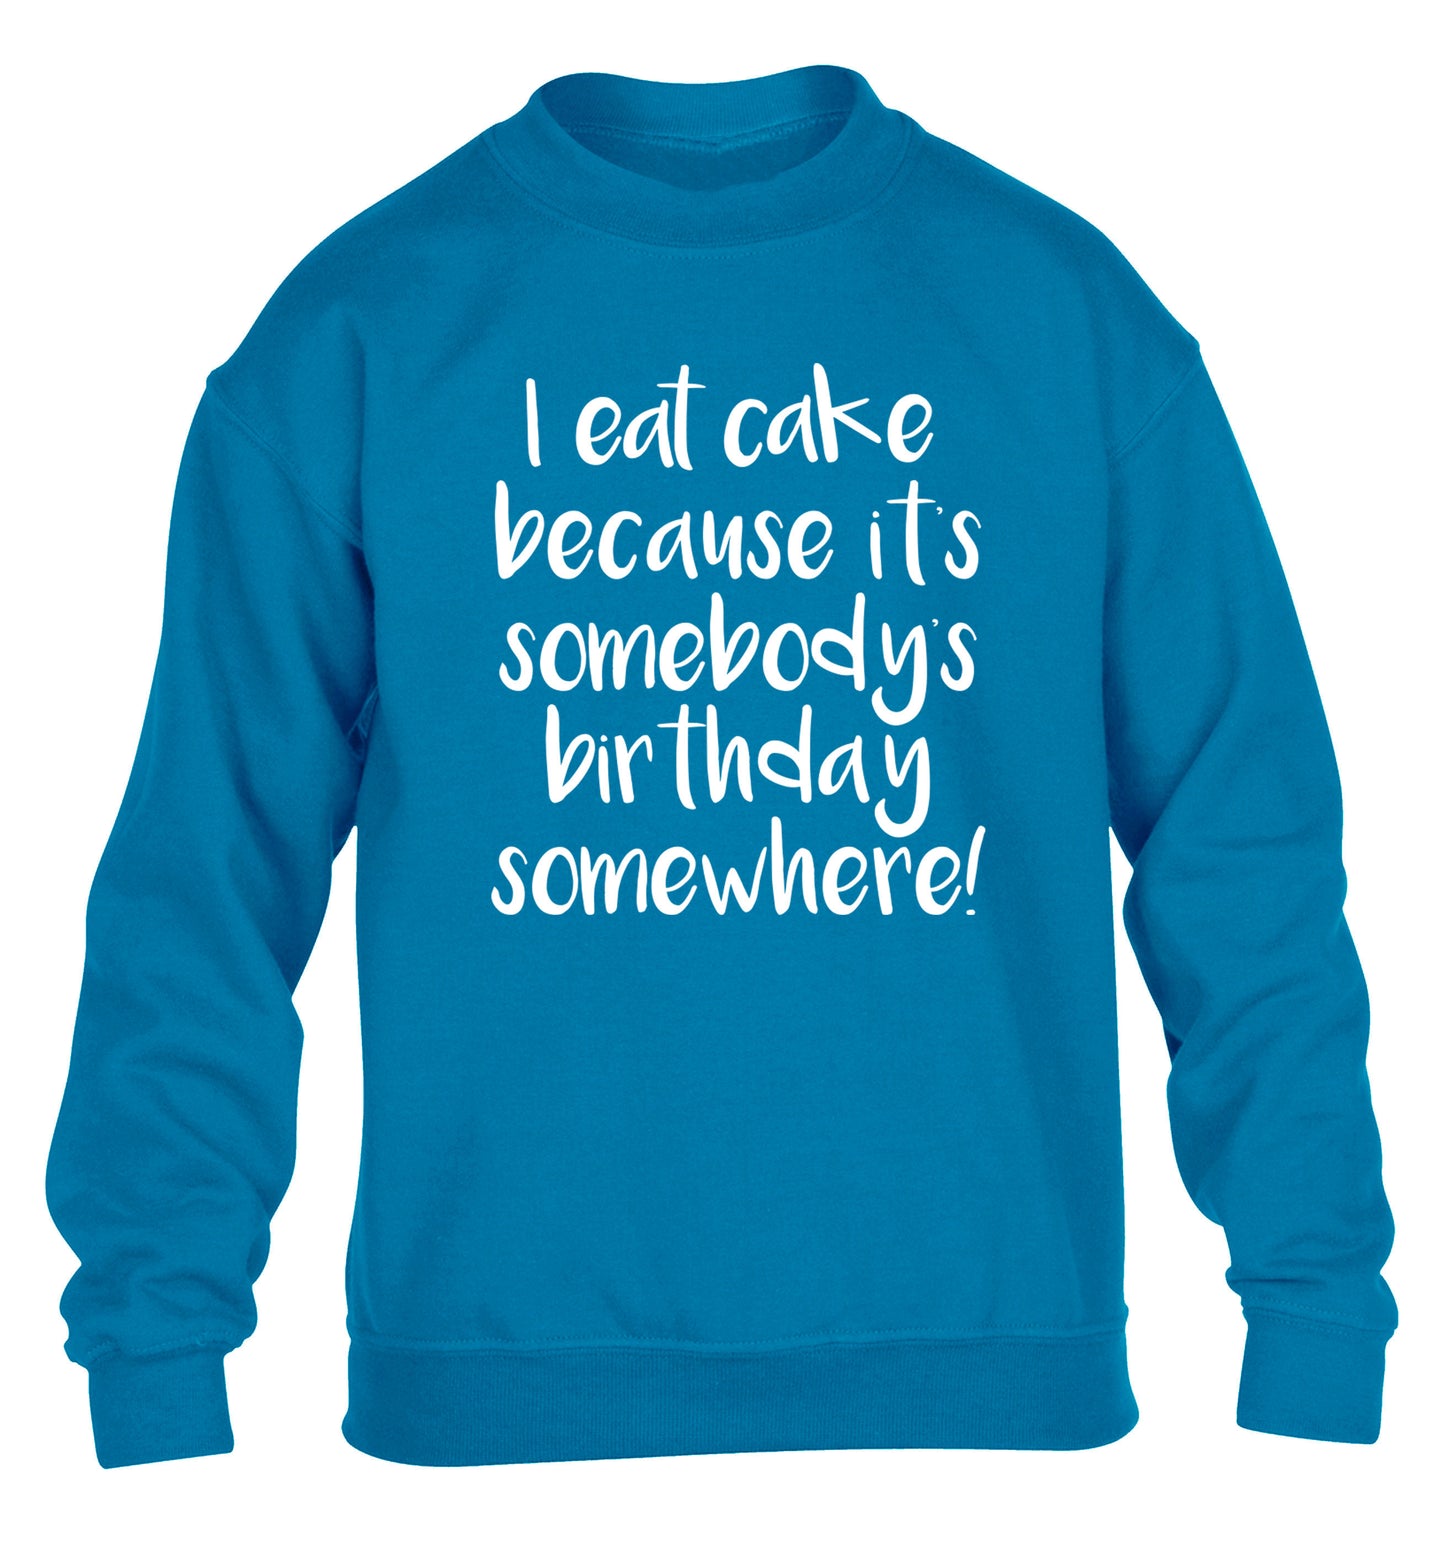 I eat cake because it's somebody's birthday somewhere! children's blue sweater 12-14 Years